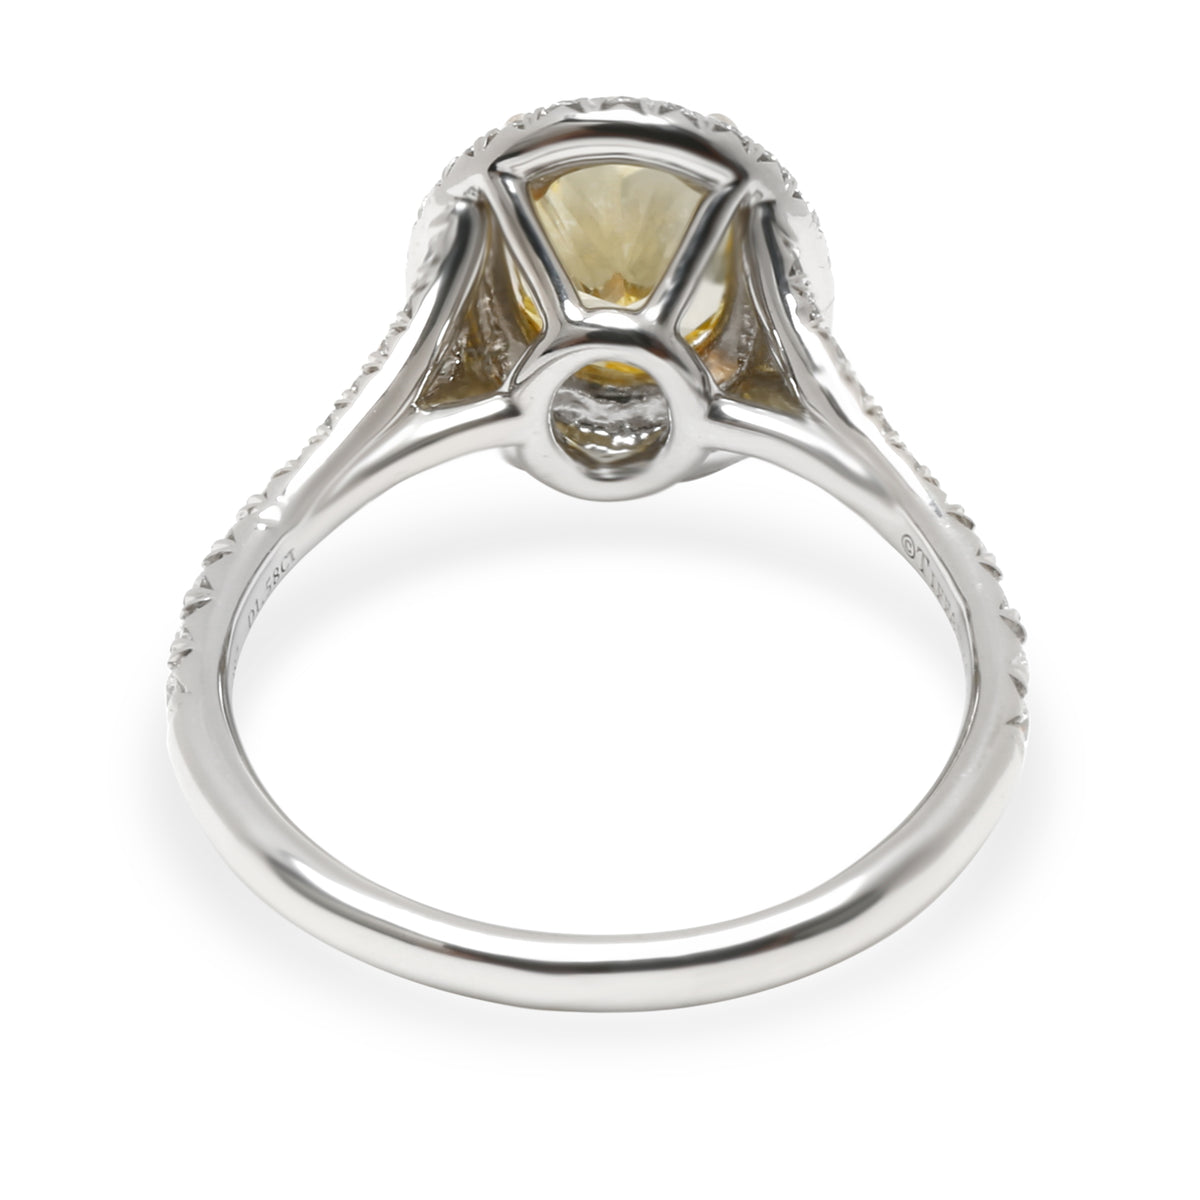 Tiffany & Co Soleste Diamond Ring in Platinum Fancy Vivid Yellow VS2 2.03ctw